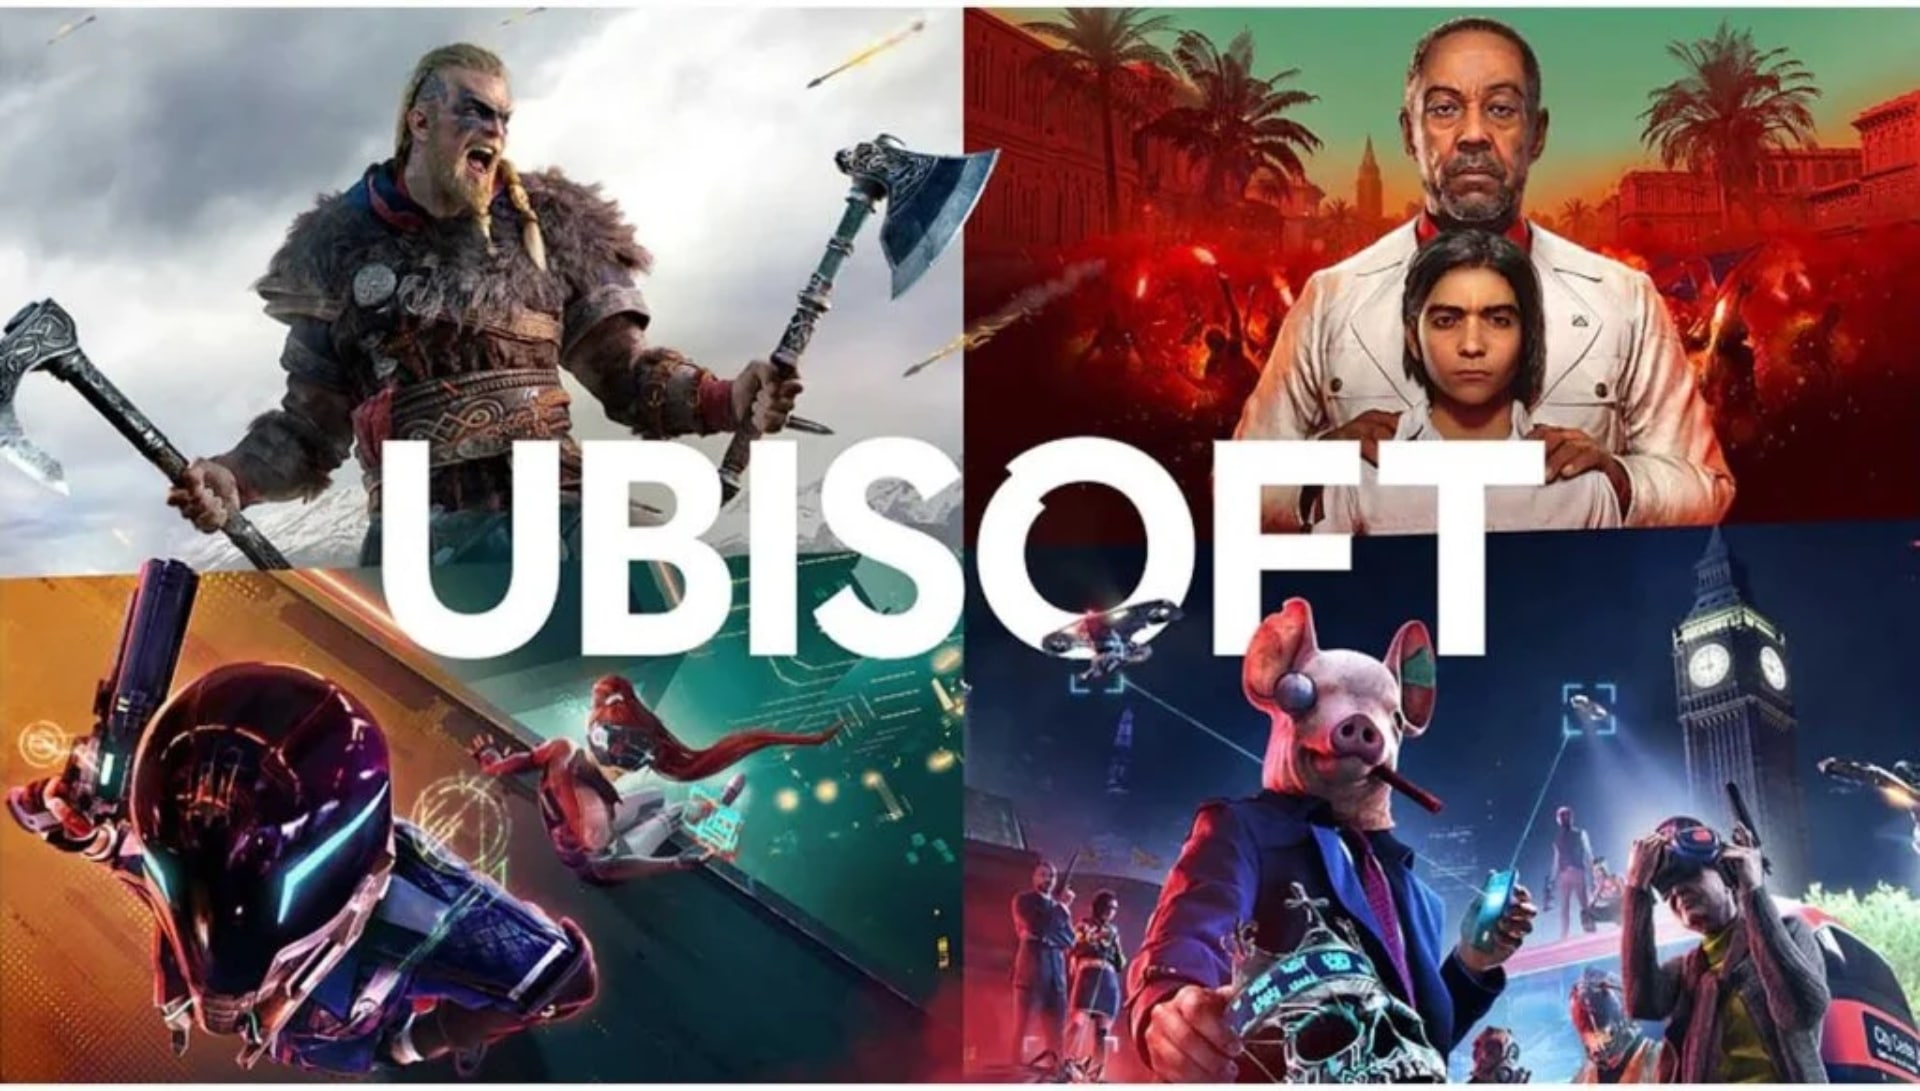 Ubisoft-Showcase-not-happening-GamersRD